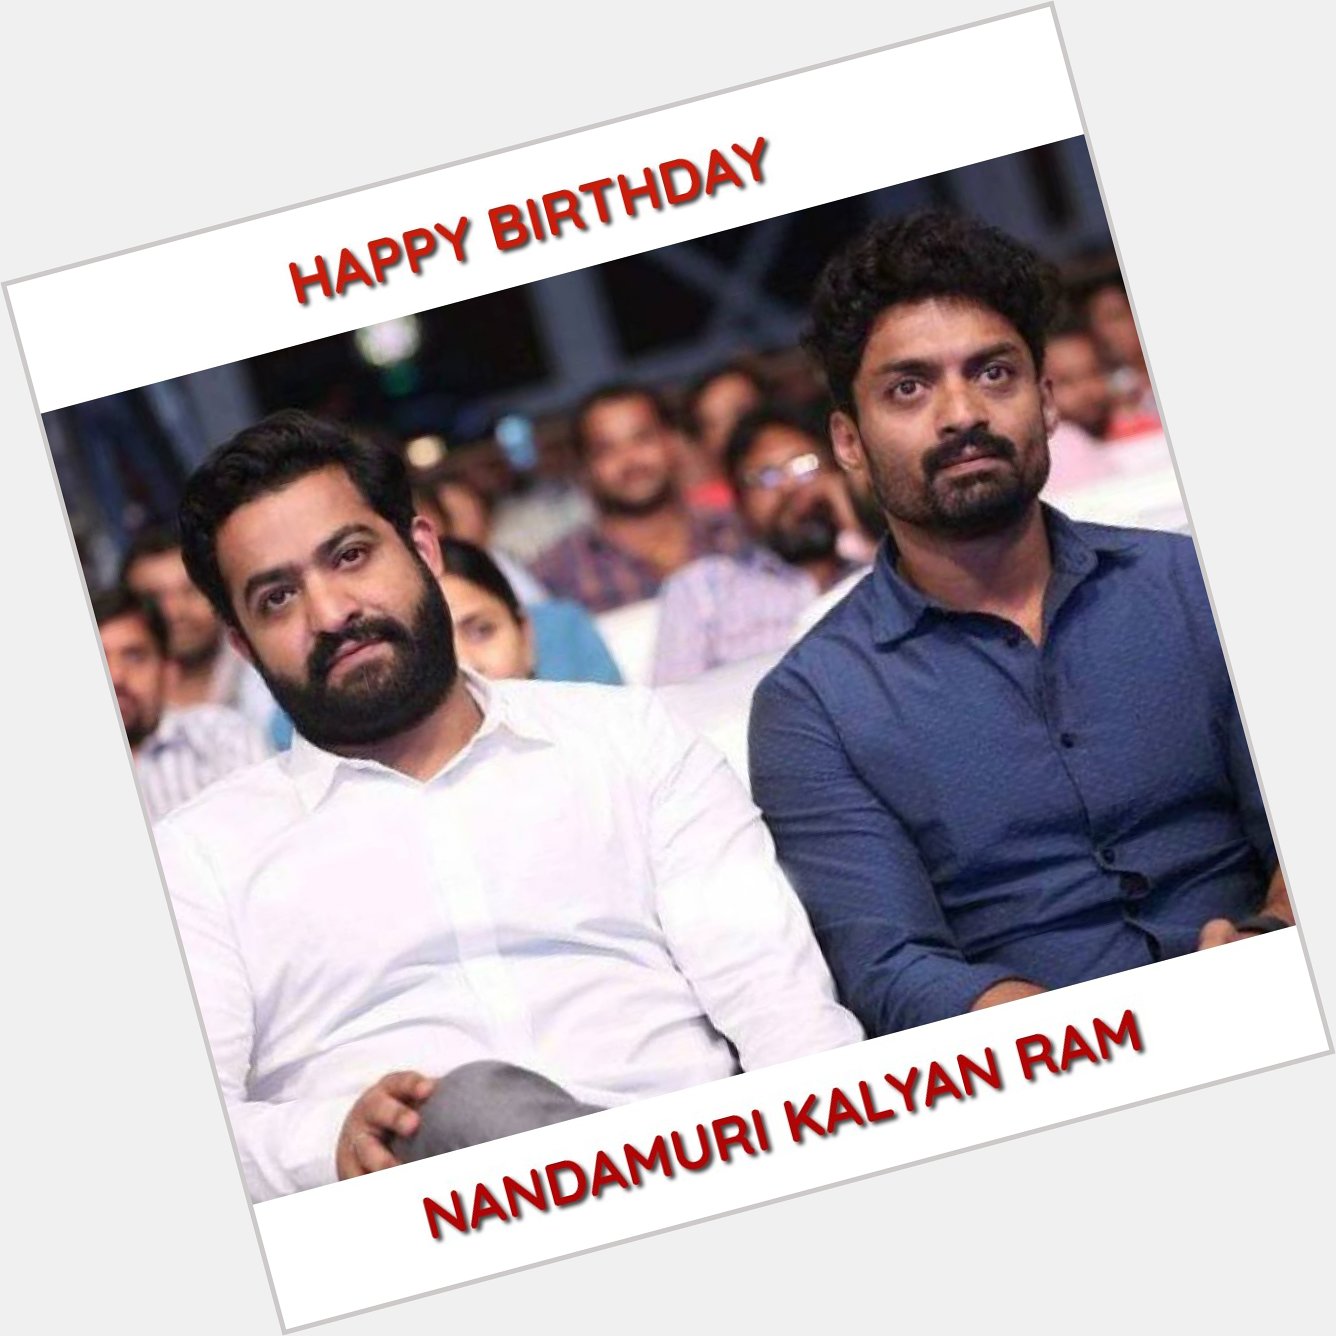 Wishing a very happy birthday to Nandamuri Kalyan ram  